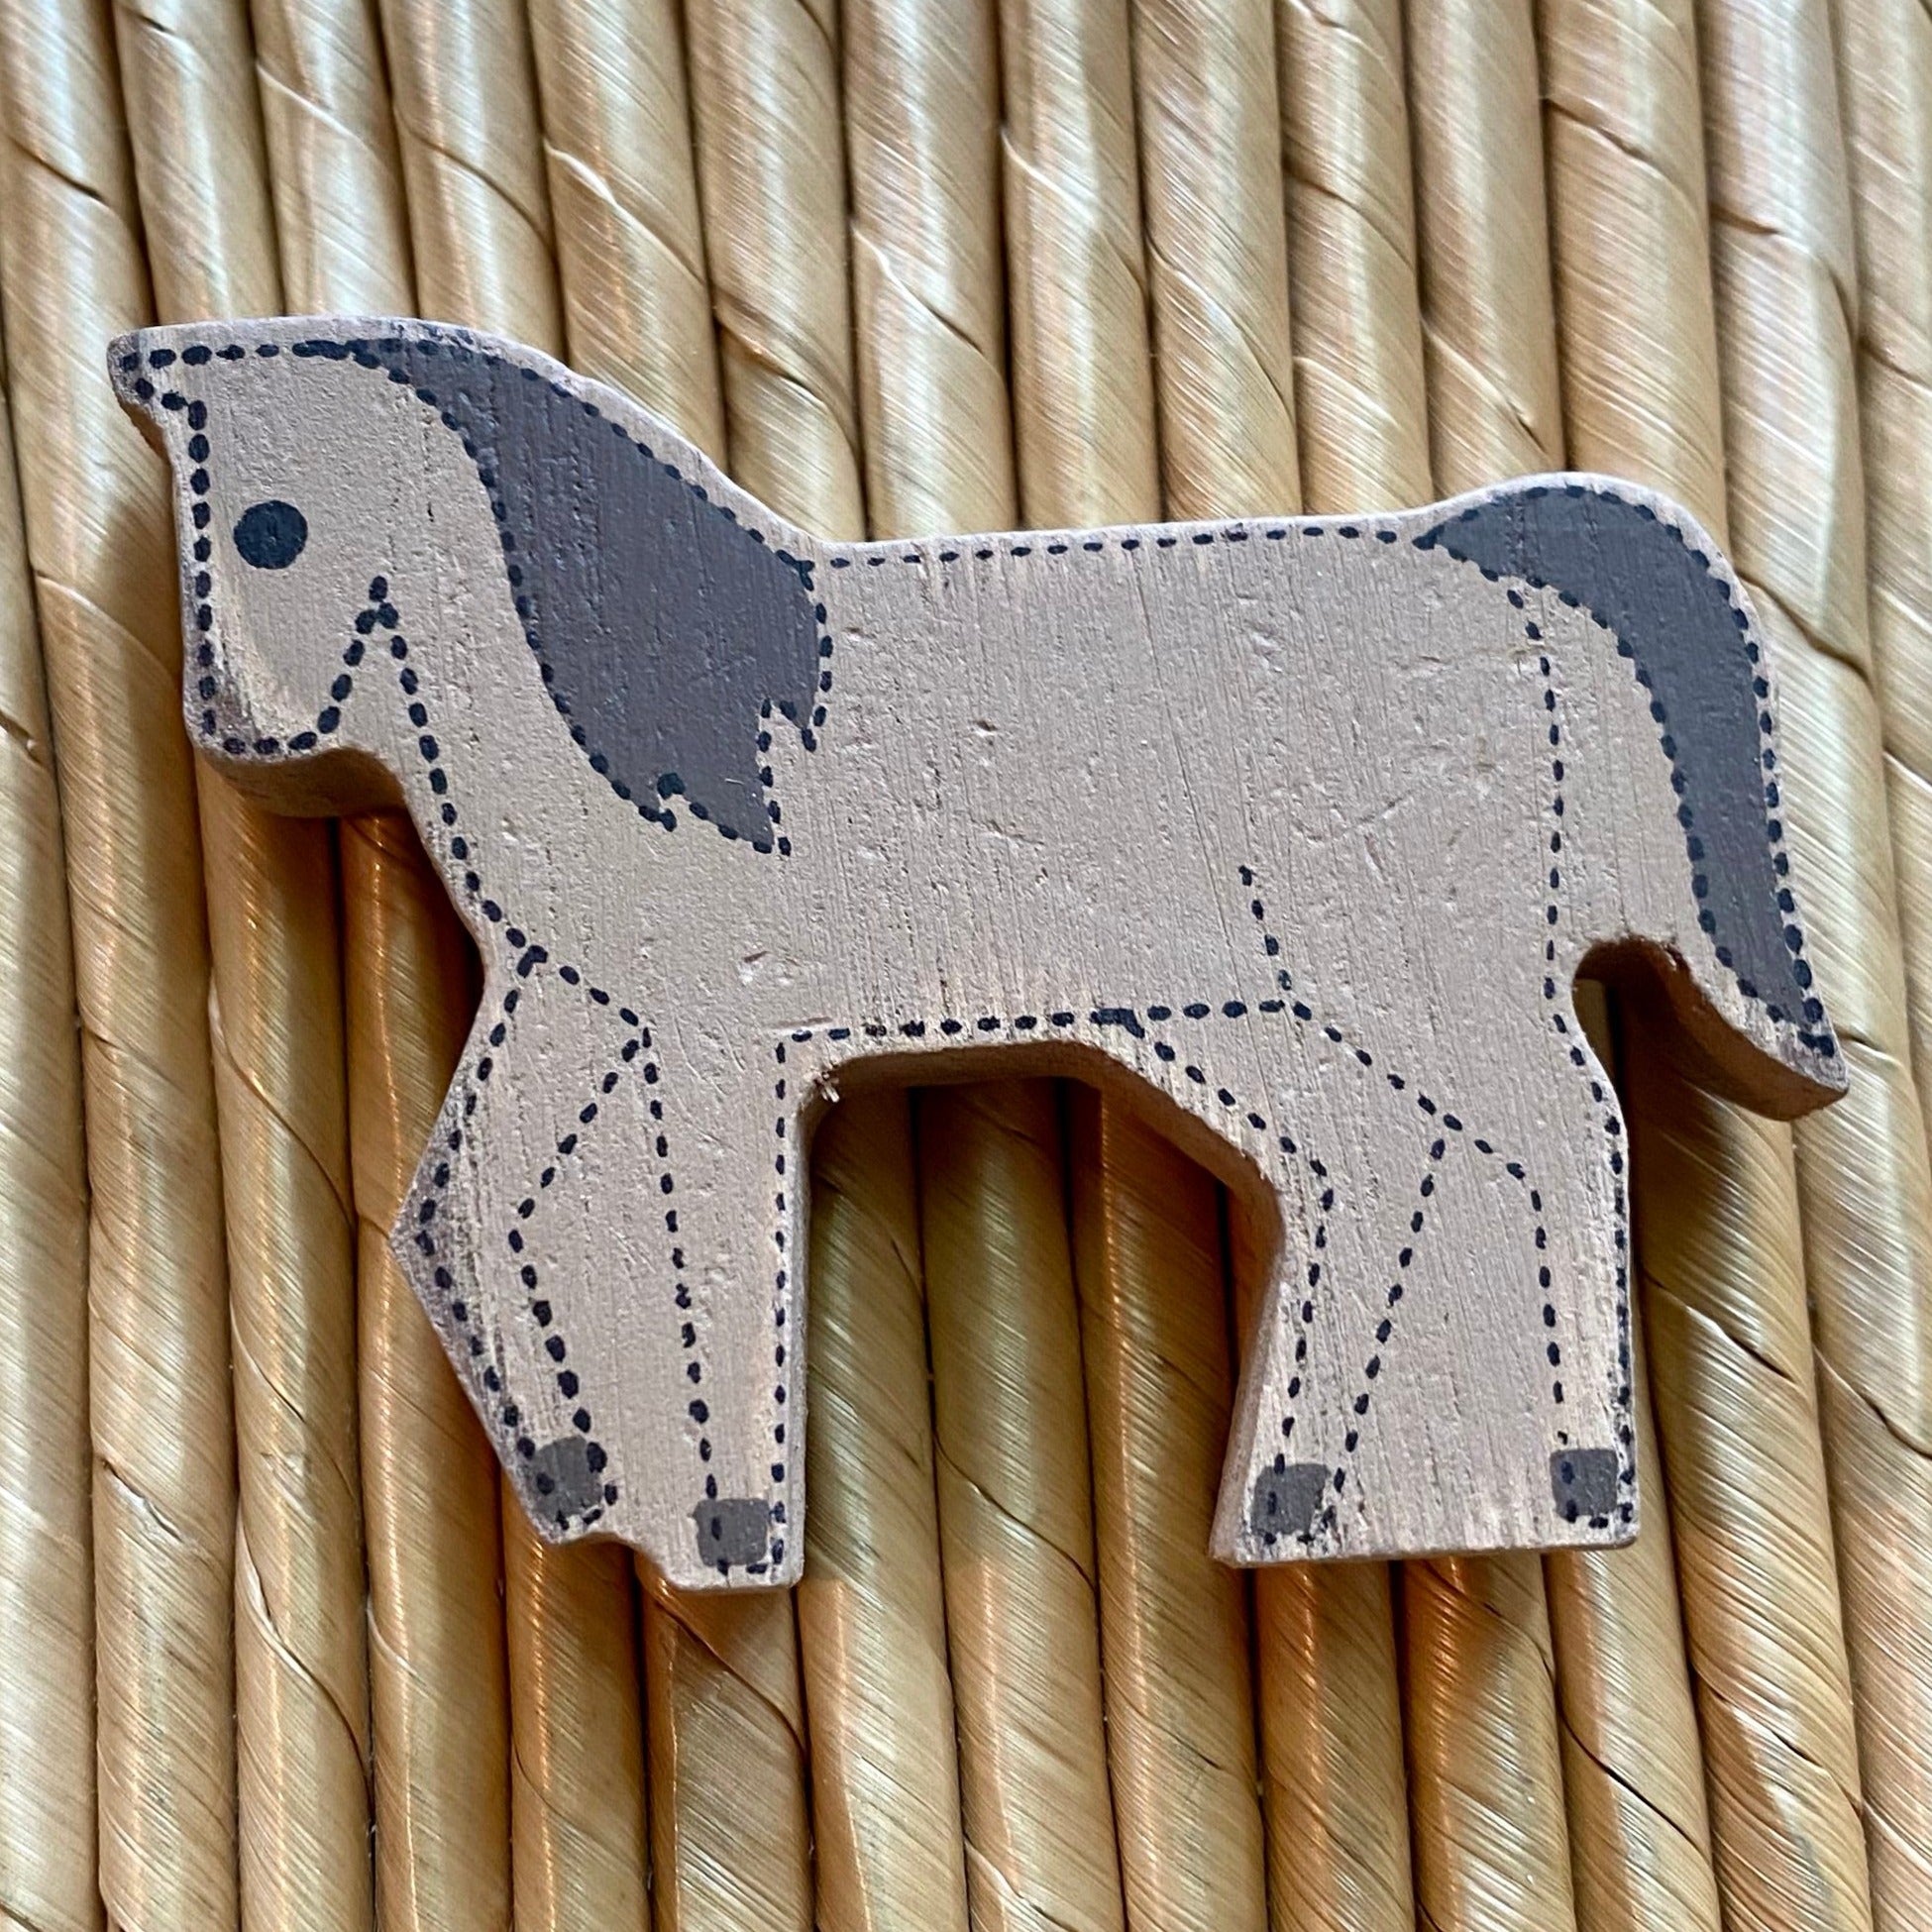 brown horse adams wood tile shape for letterboard